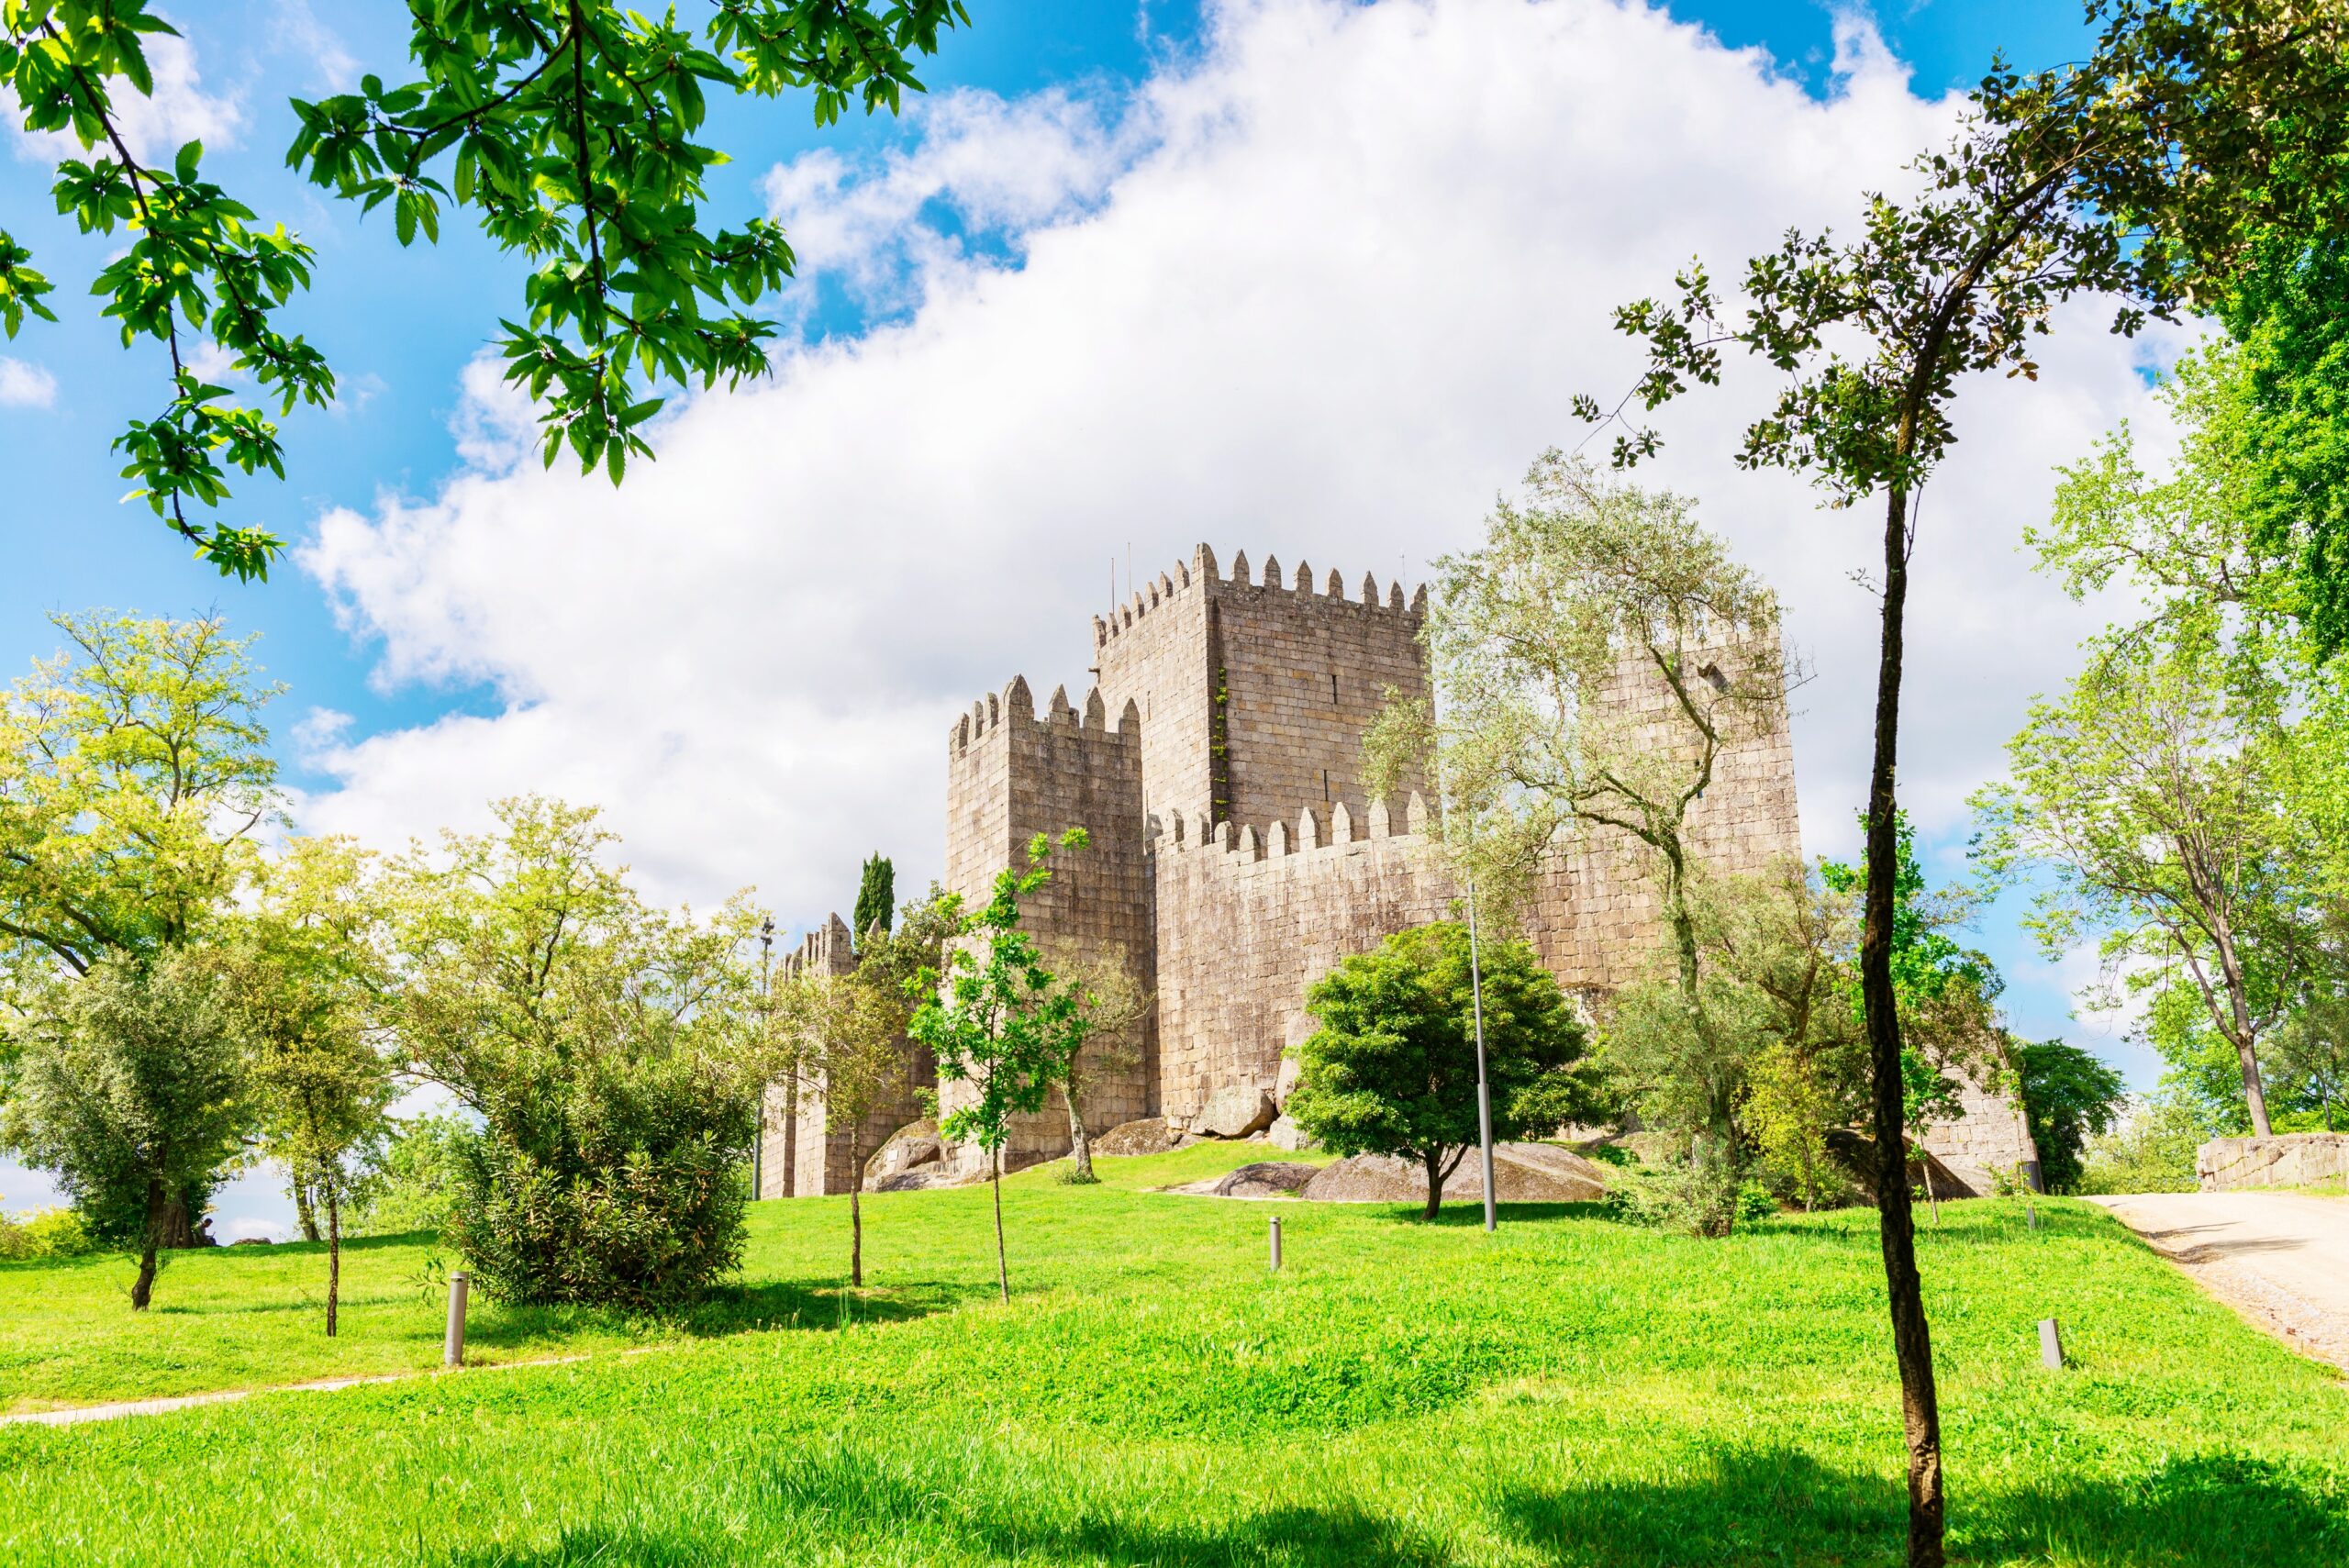 <img src="castle.jpg" alt="castle in guimaraes northern portugal"/>